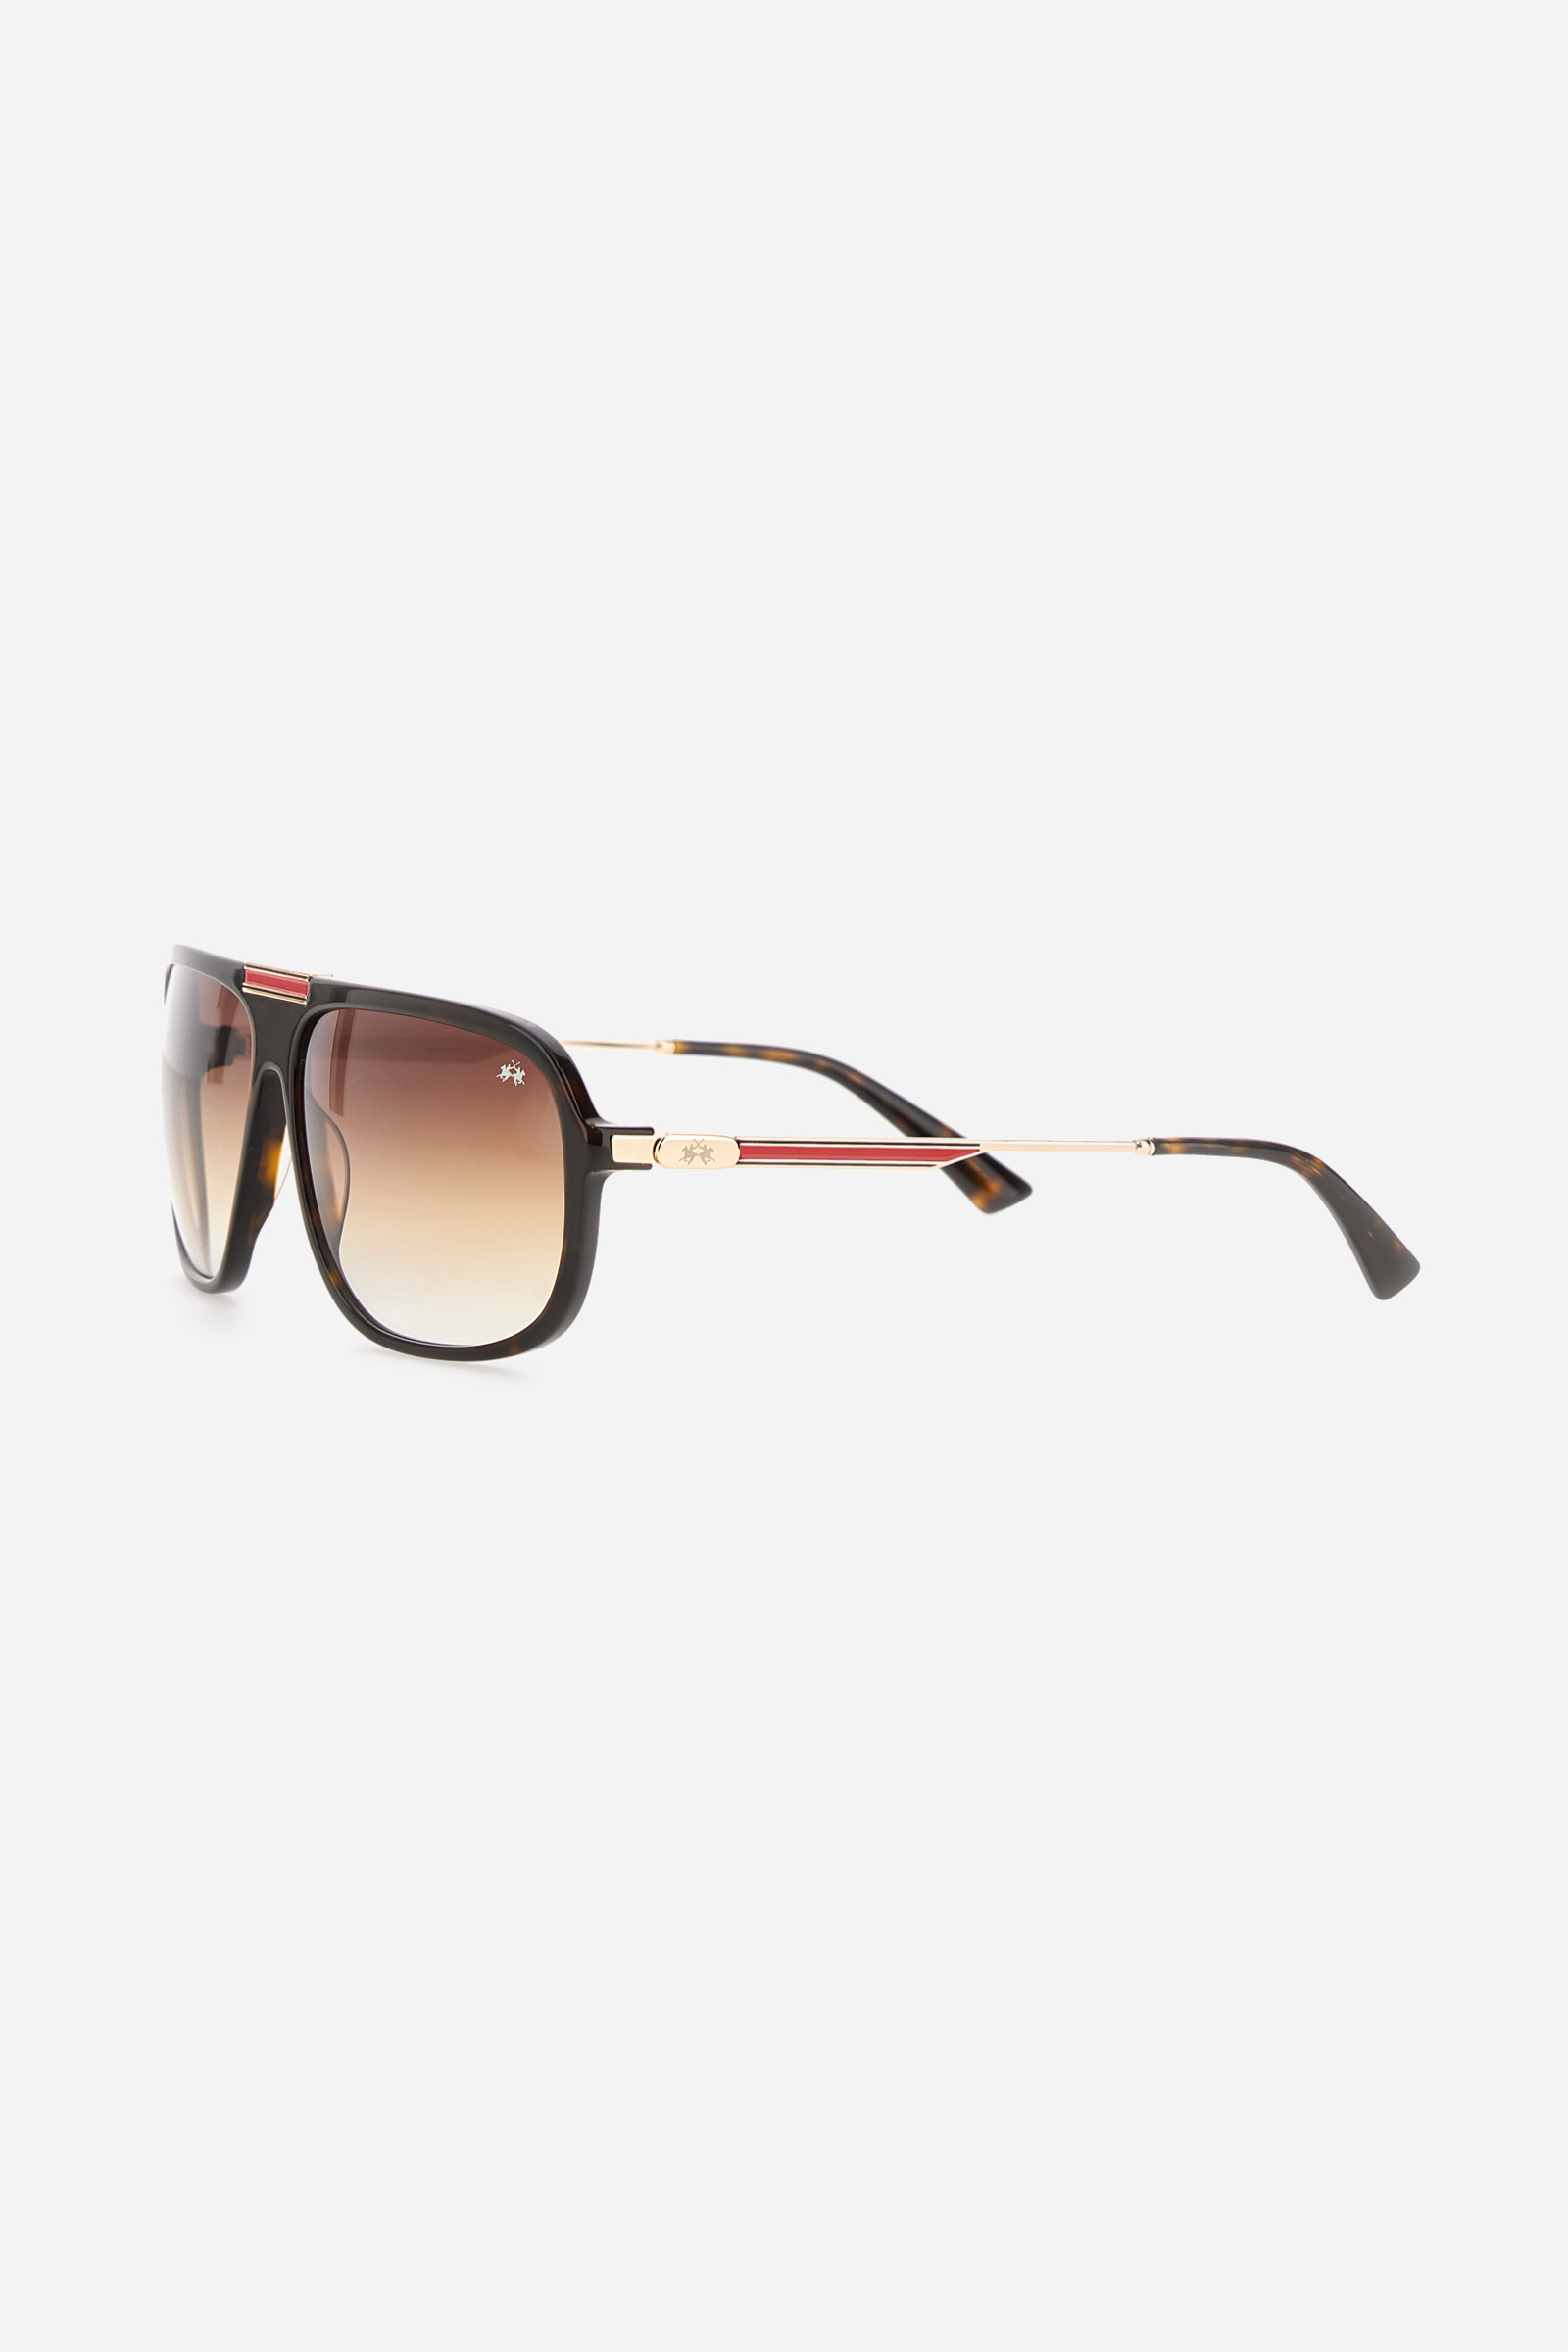 Sunglasses aviator style Dark Avana Martina La Shop | Online